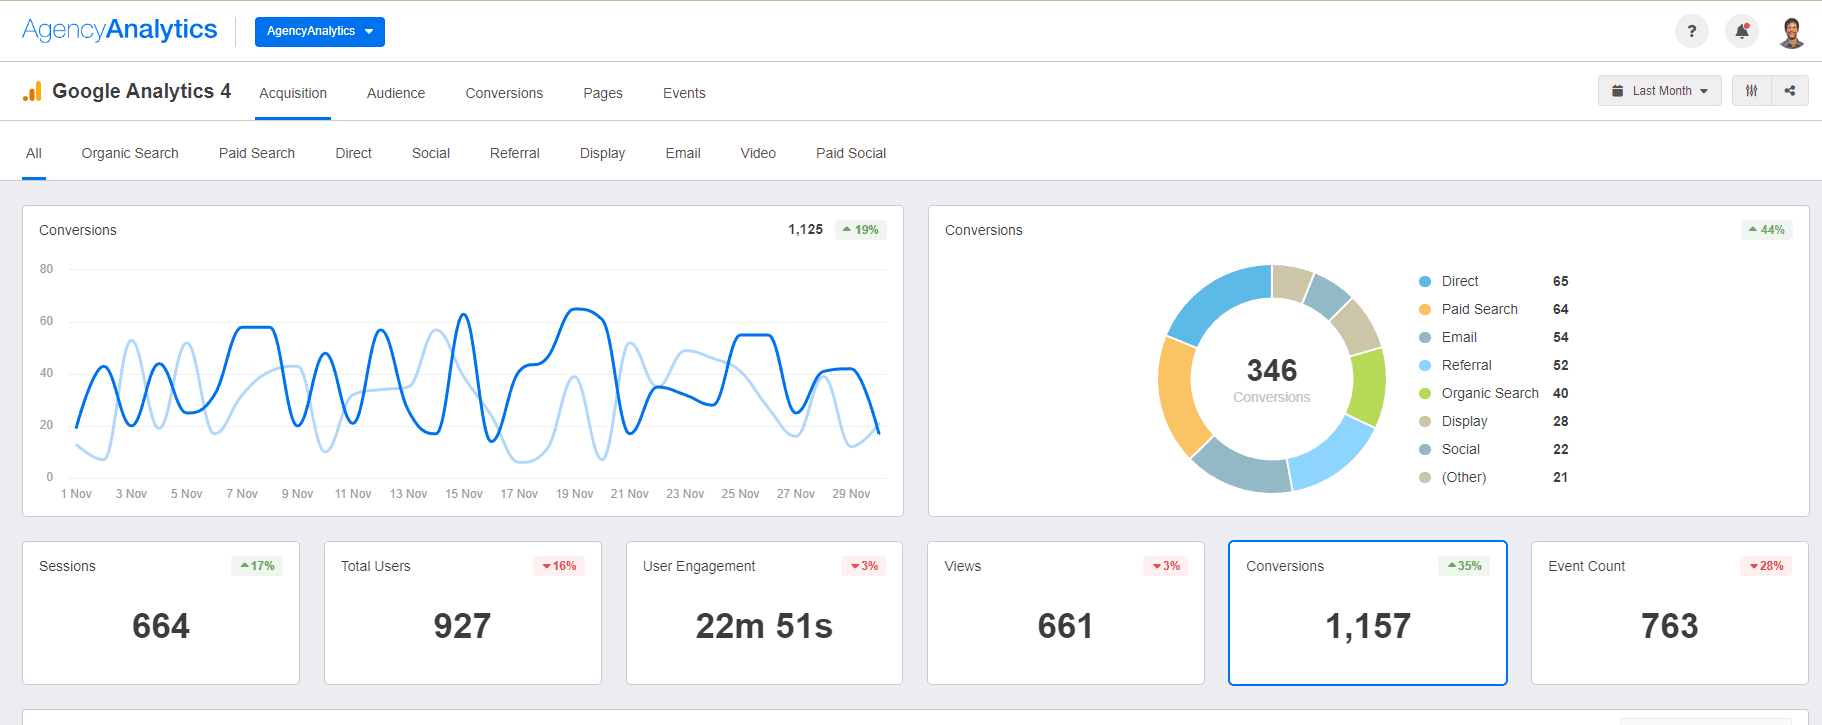 AgencyAnalytics - Google Analytics Dashboard